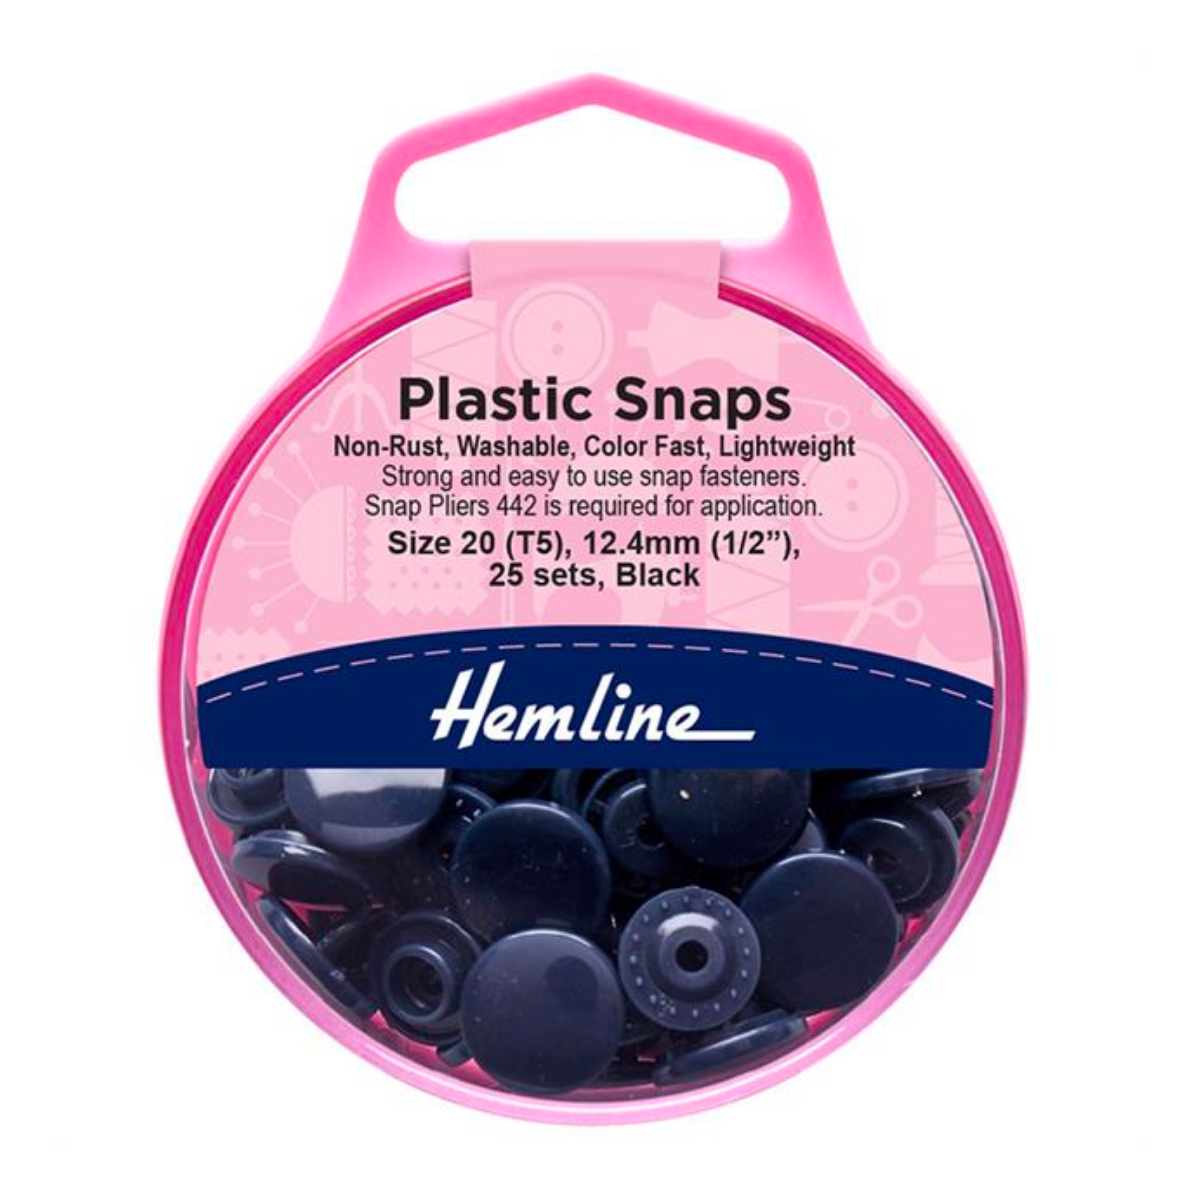 Hemline Plastic Snaps, Black, 25 Sets